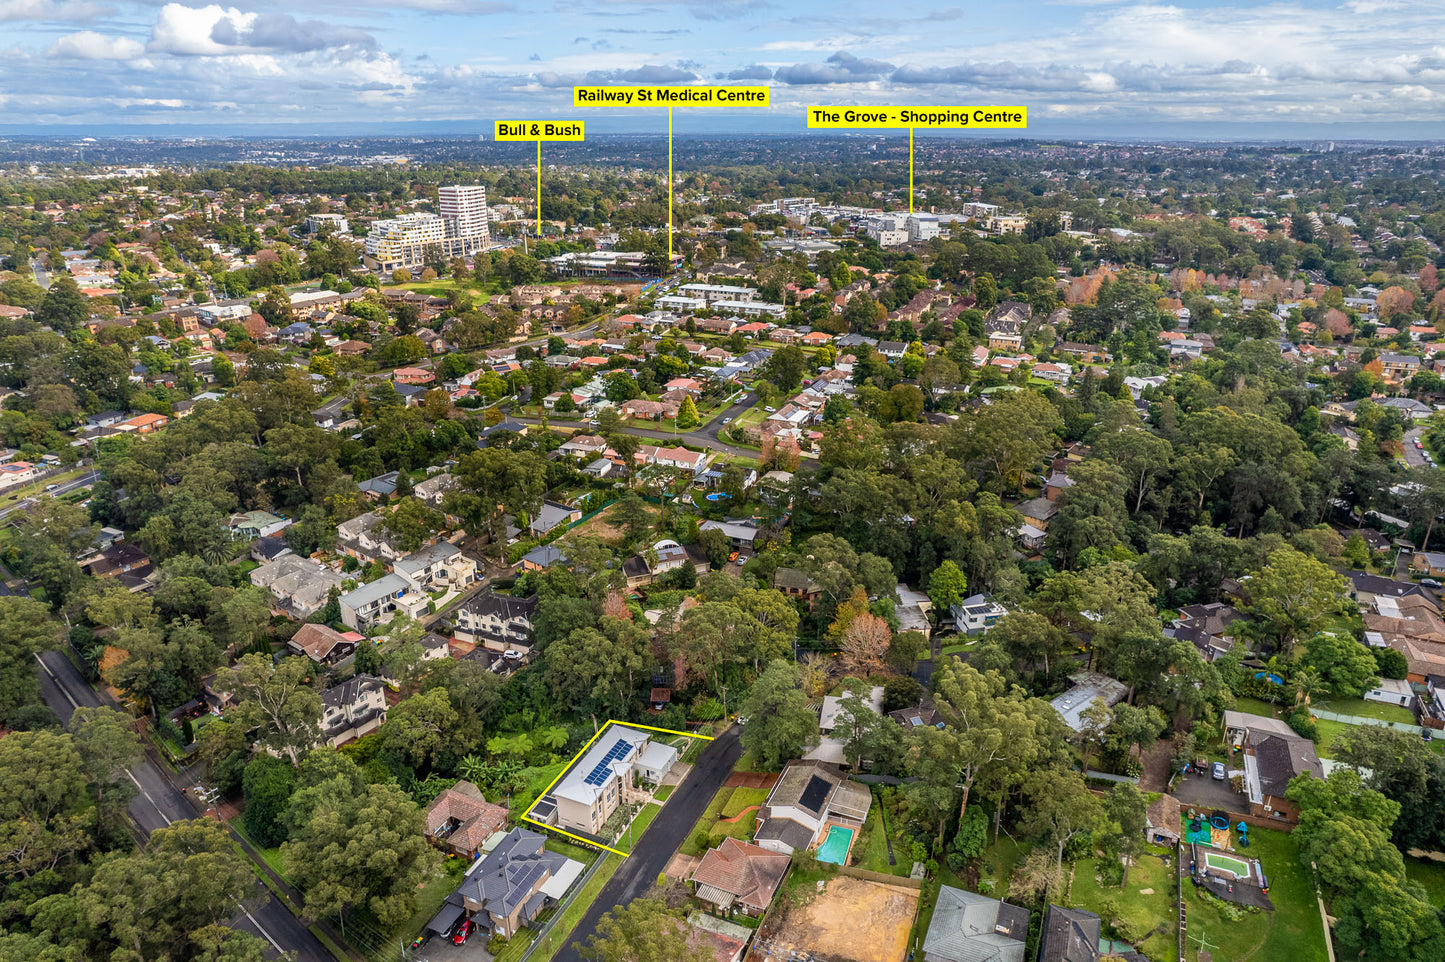 2A Carrabai Place, Baulkham Hills, NSW 2153 - $3,500,000